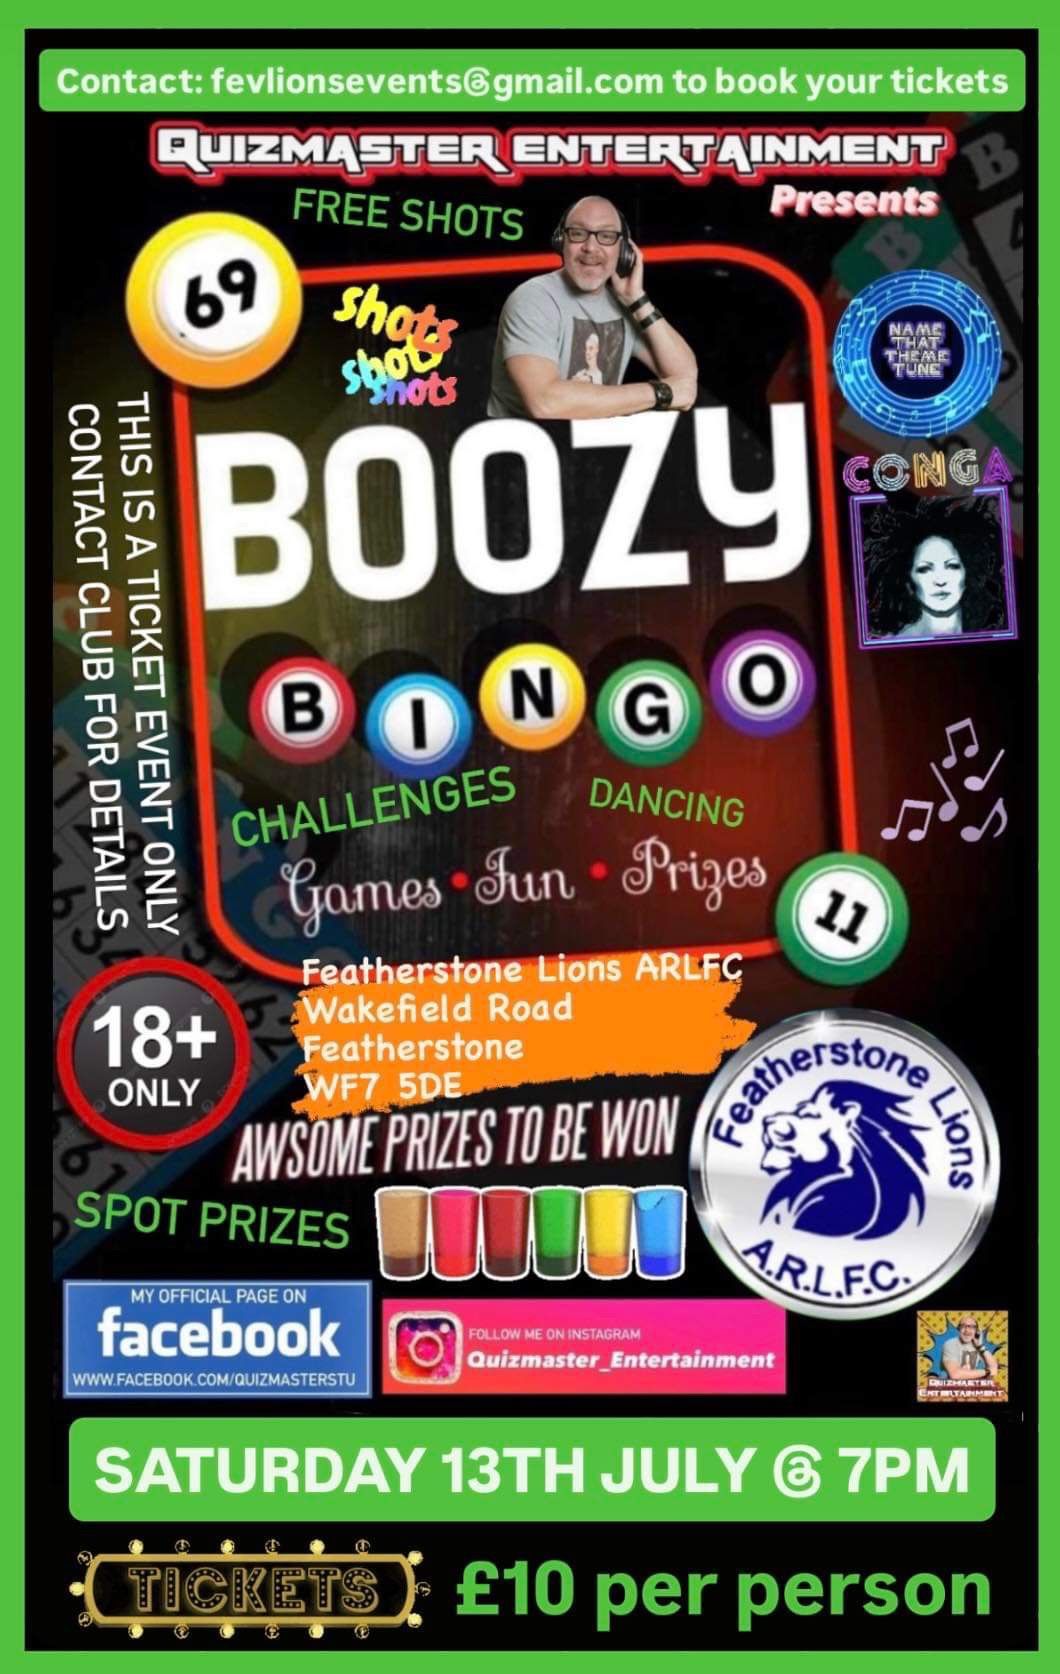 Boozy Bingo